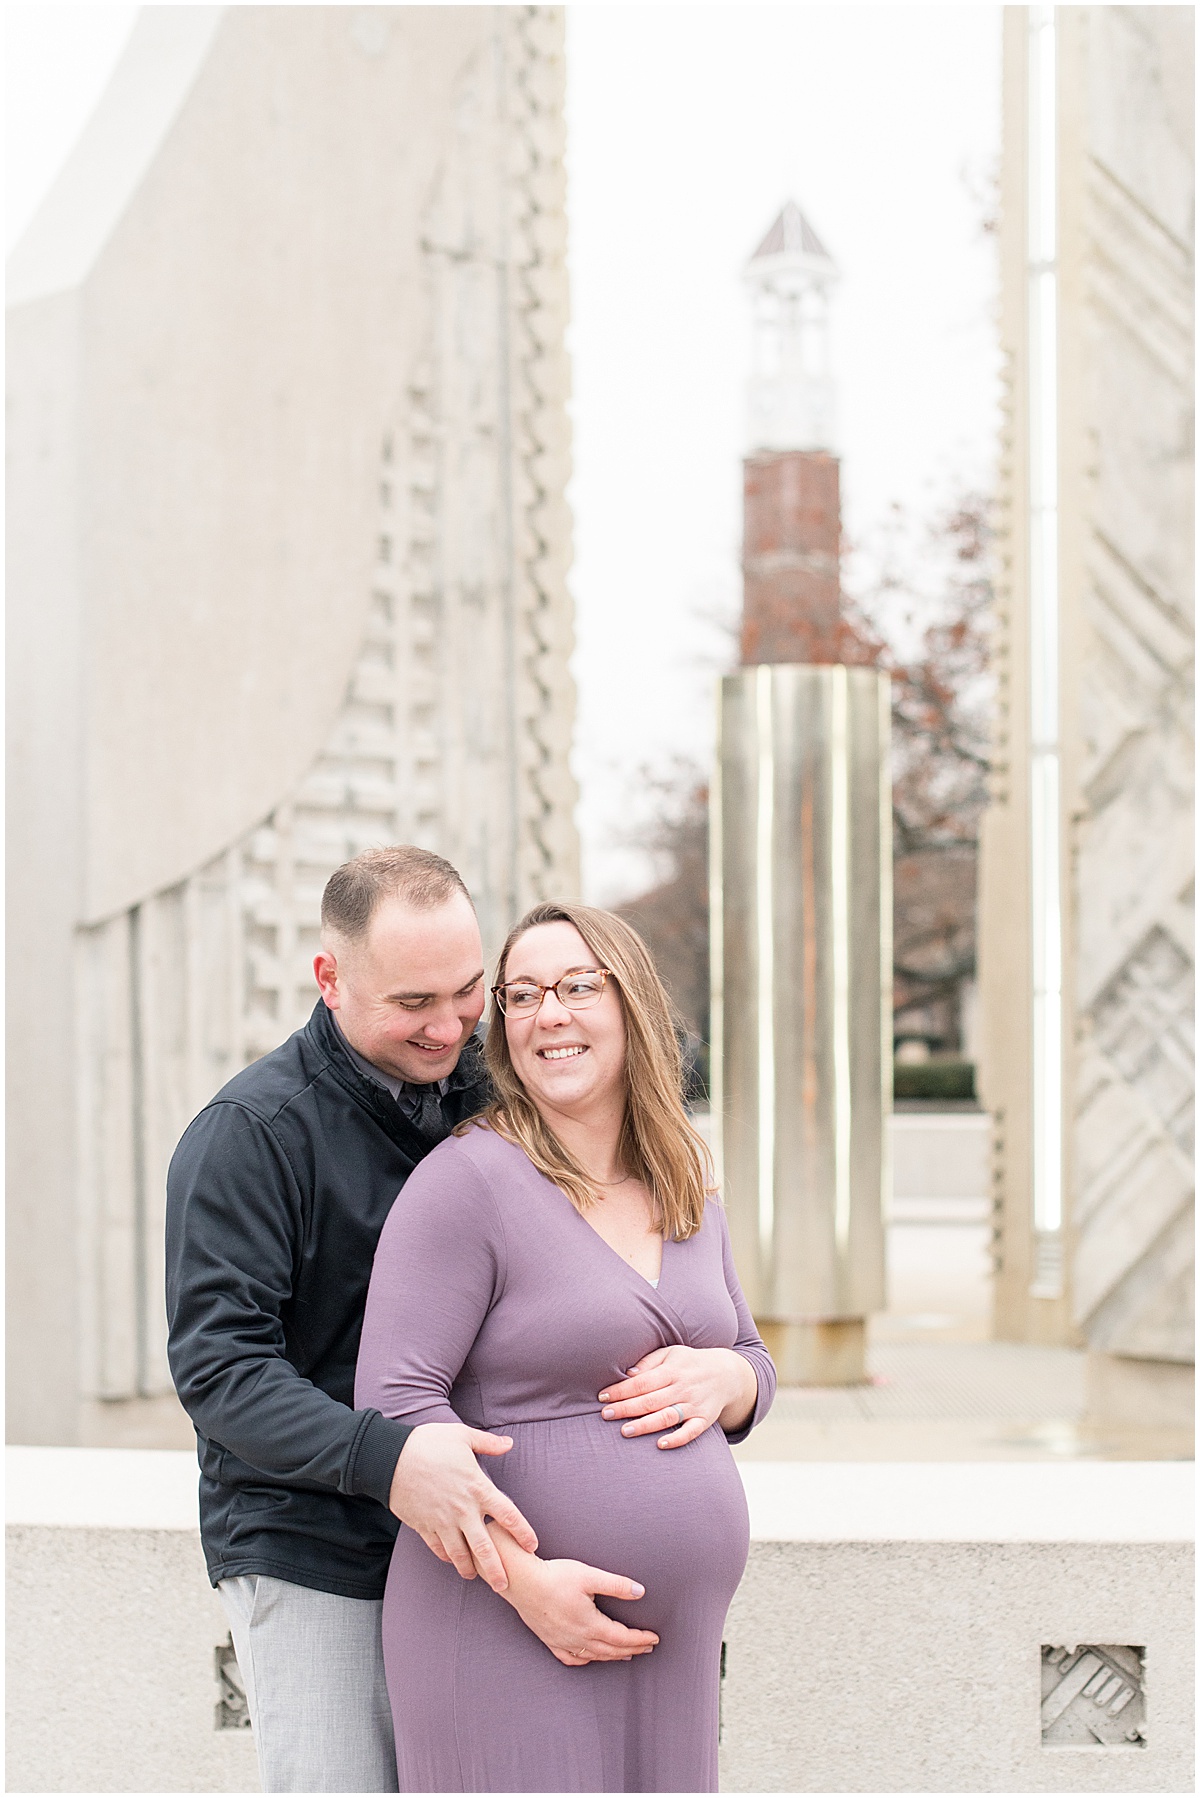 Winter maternity photos at Purdue University